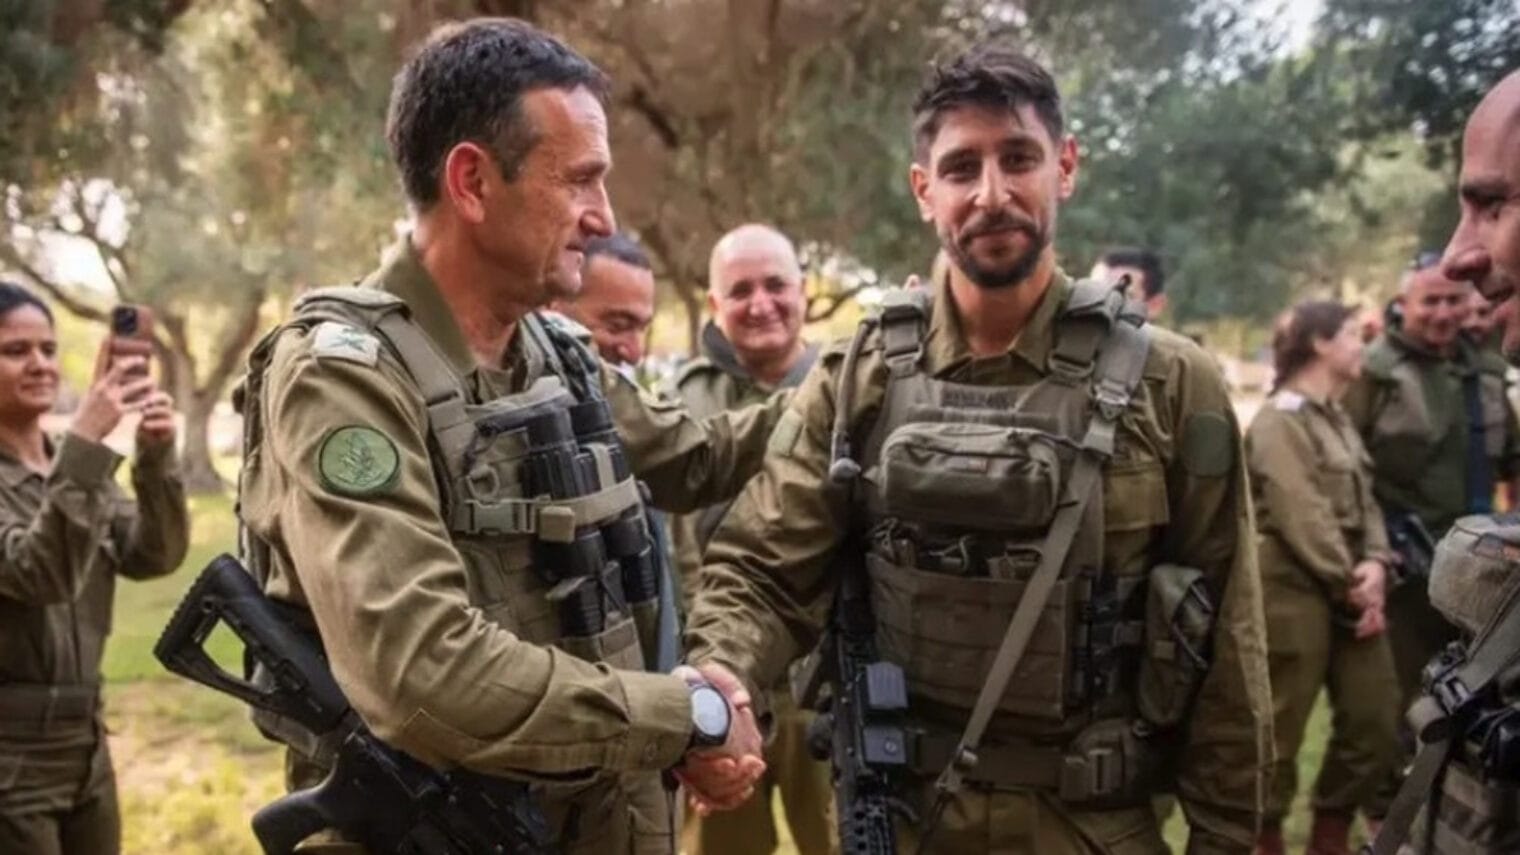 IDF Chief of Staff Herzi Halevi with Idan Amedi. Photo courtesy of the Israel Defense Forces